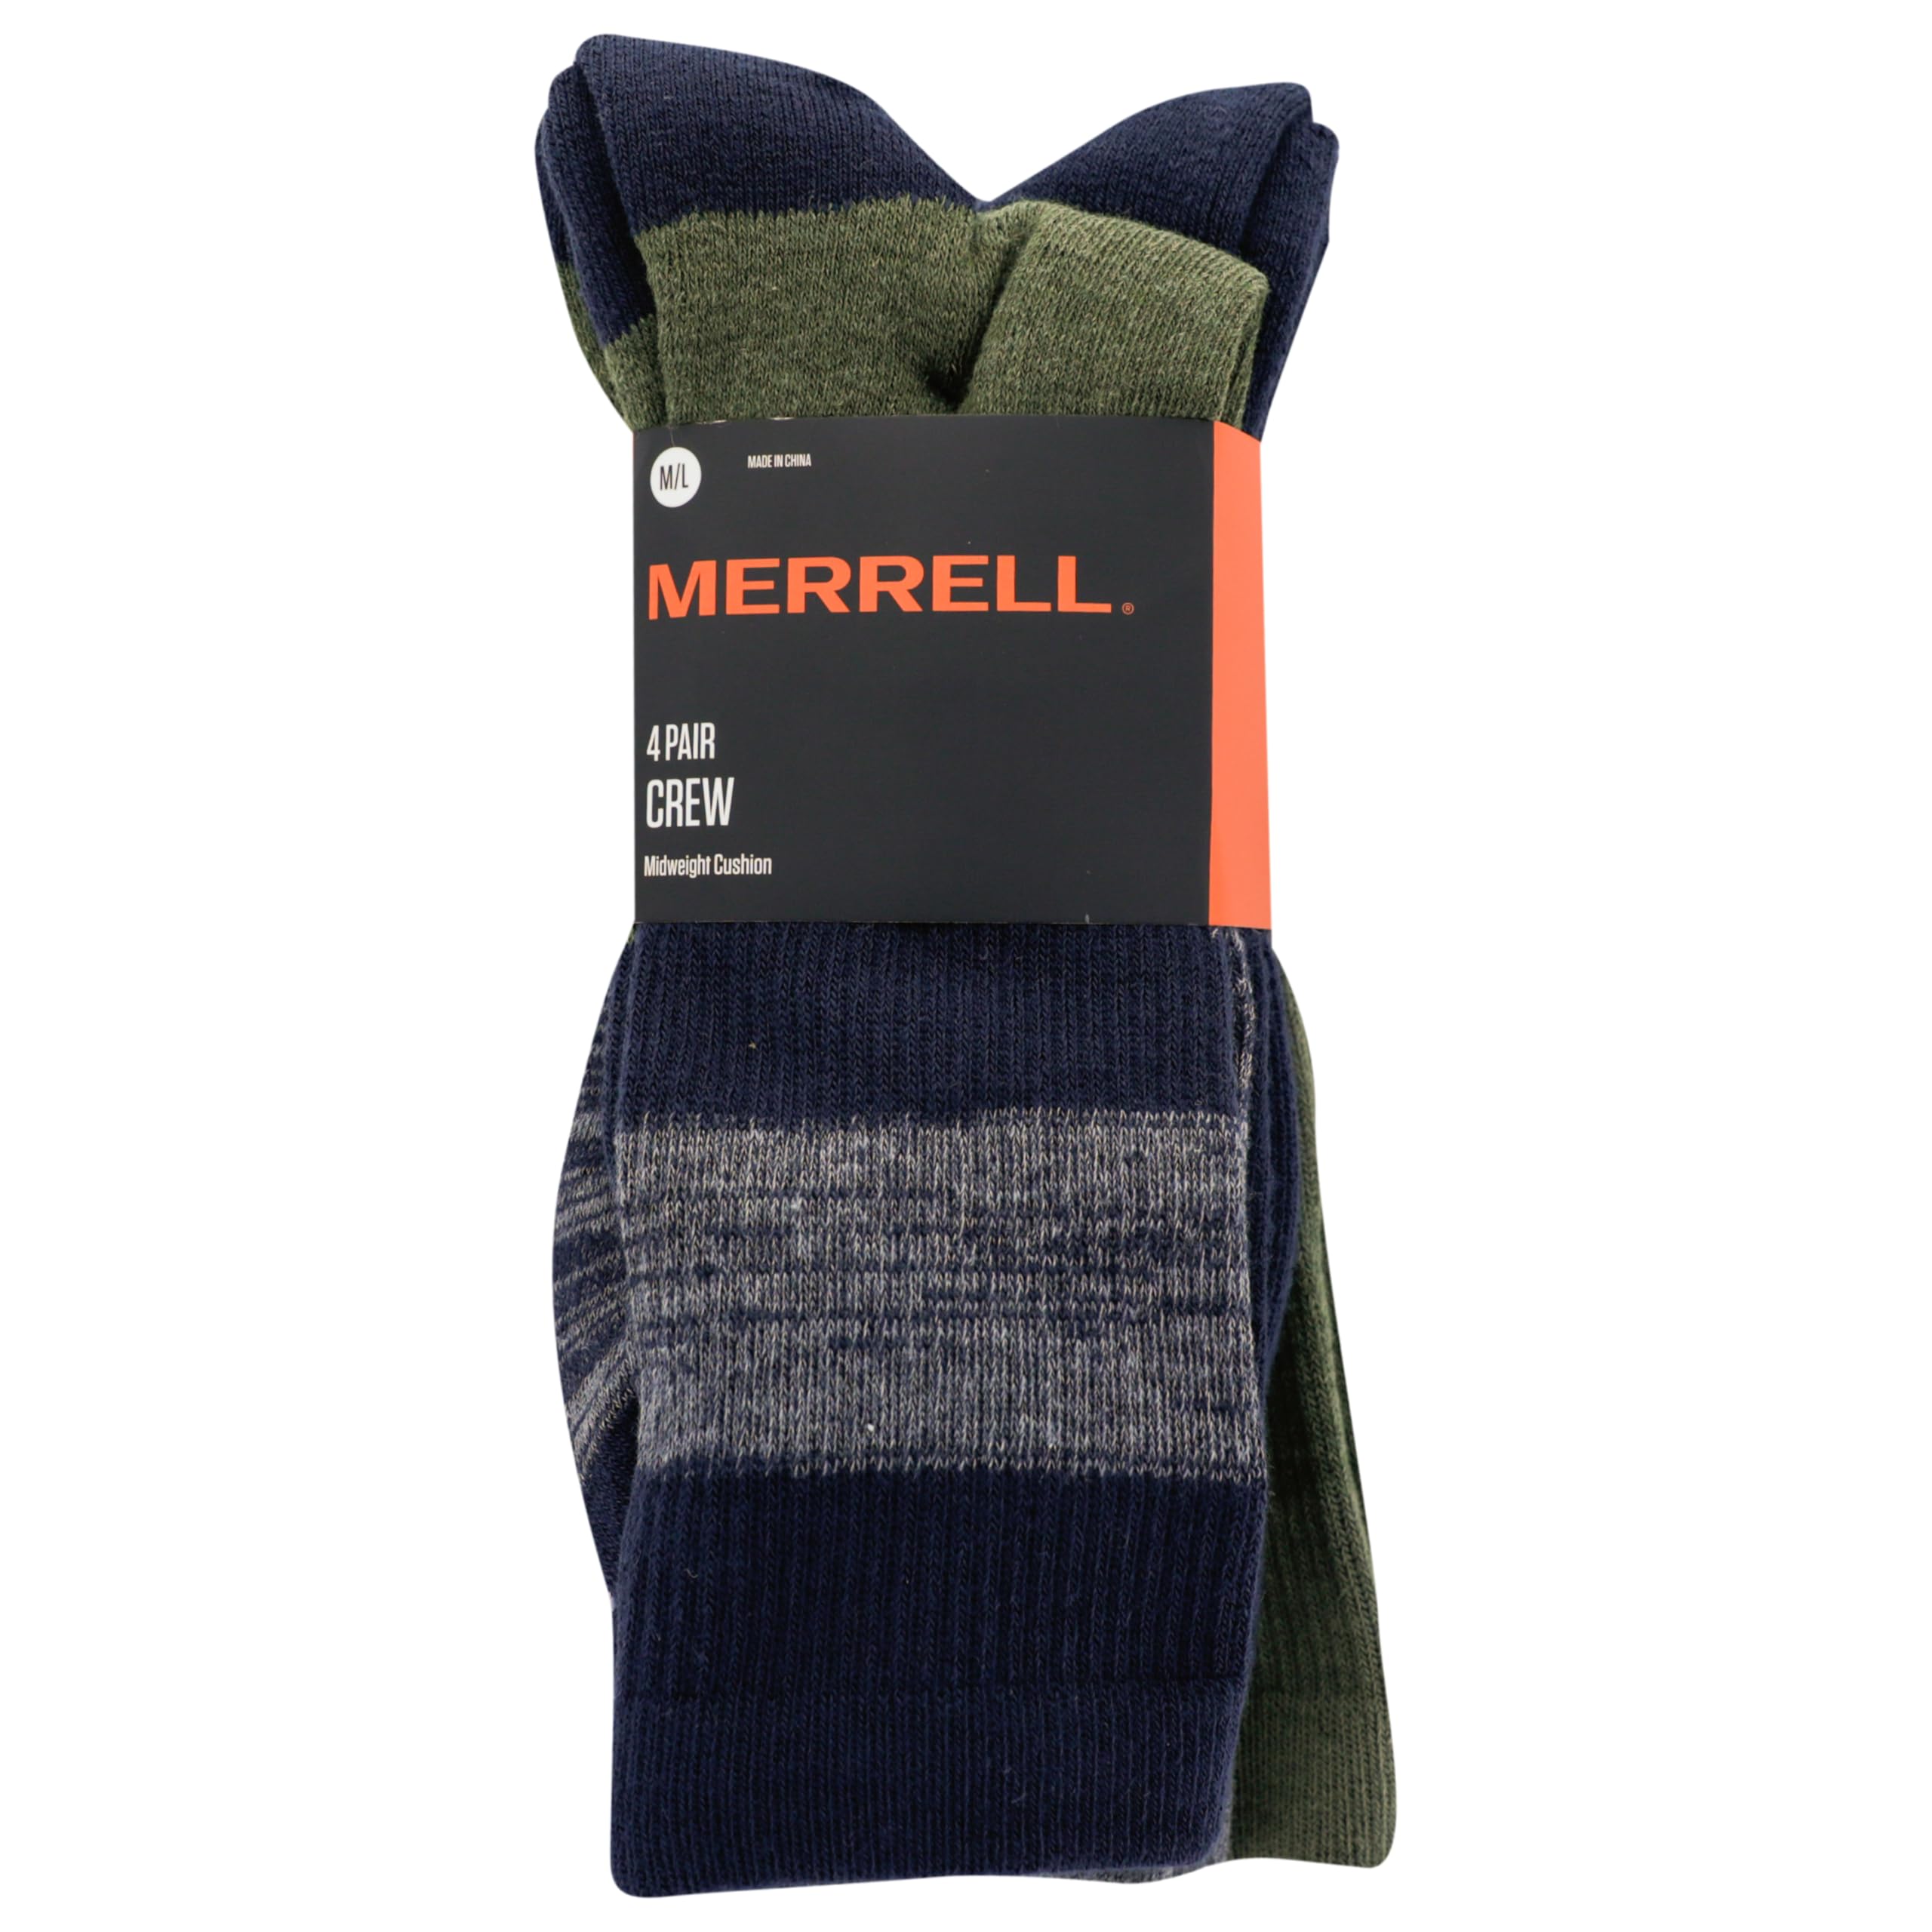 Merrell Midweight Cushion